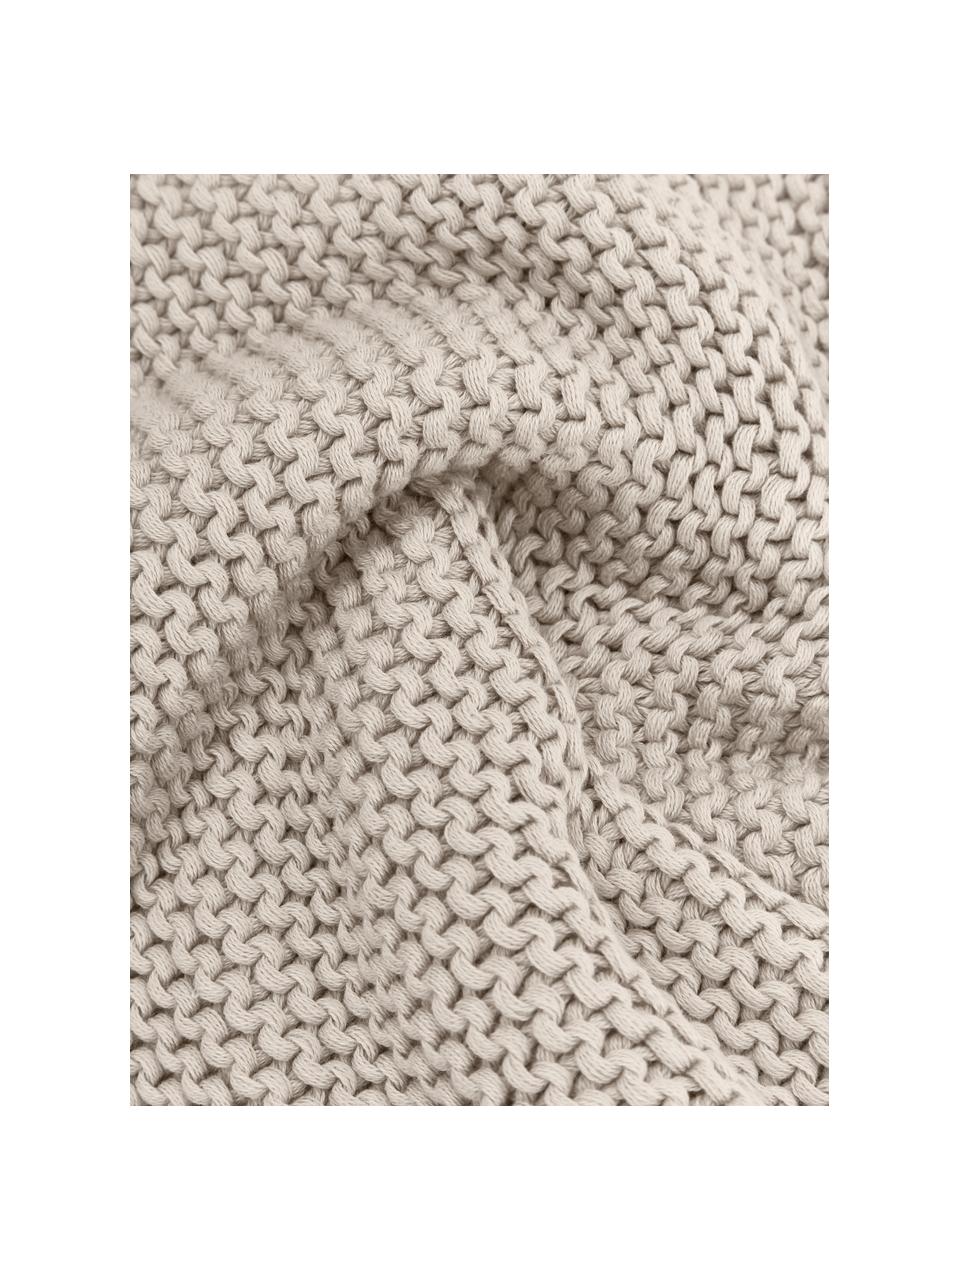 Coperta a maglia in cotone biologico beige Adalyn, 100% cotone biologico, certificato GOTS, Beige, Larg. 150 x Lung. 200 cm